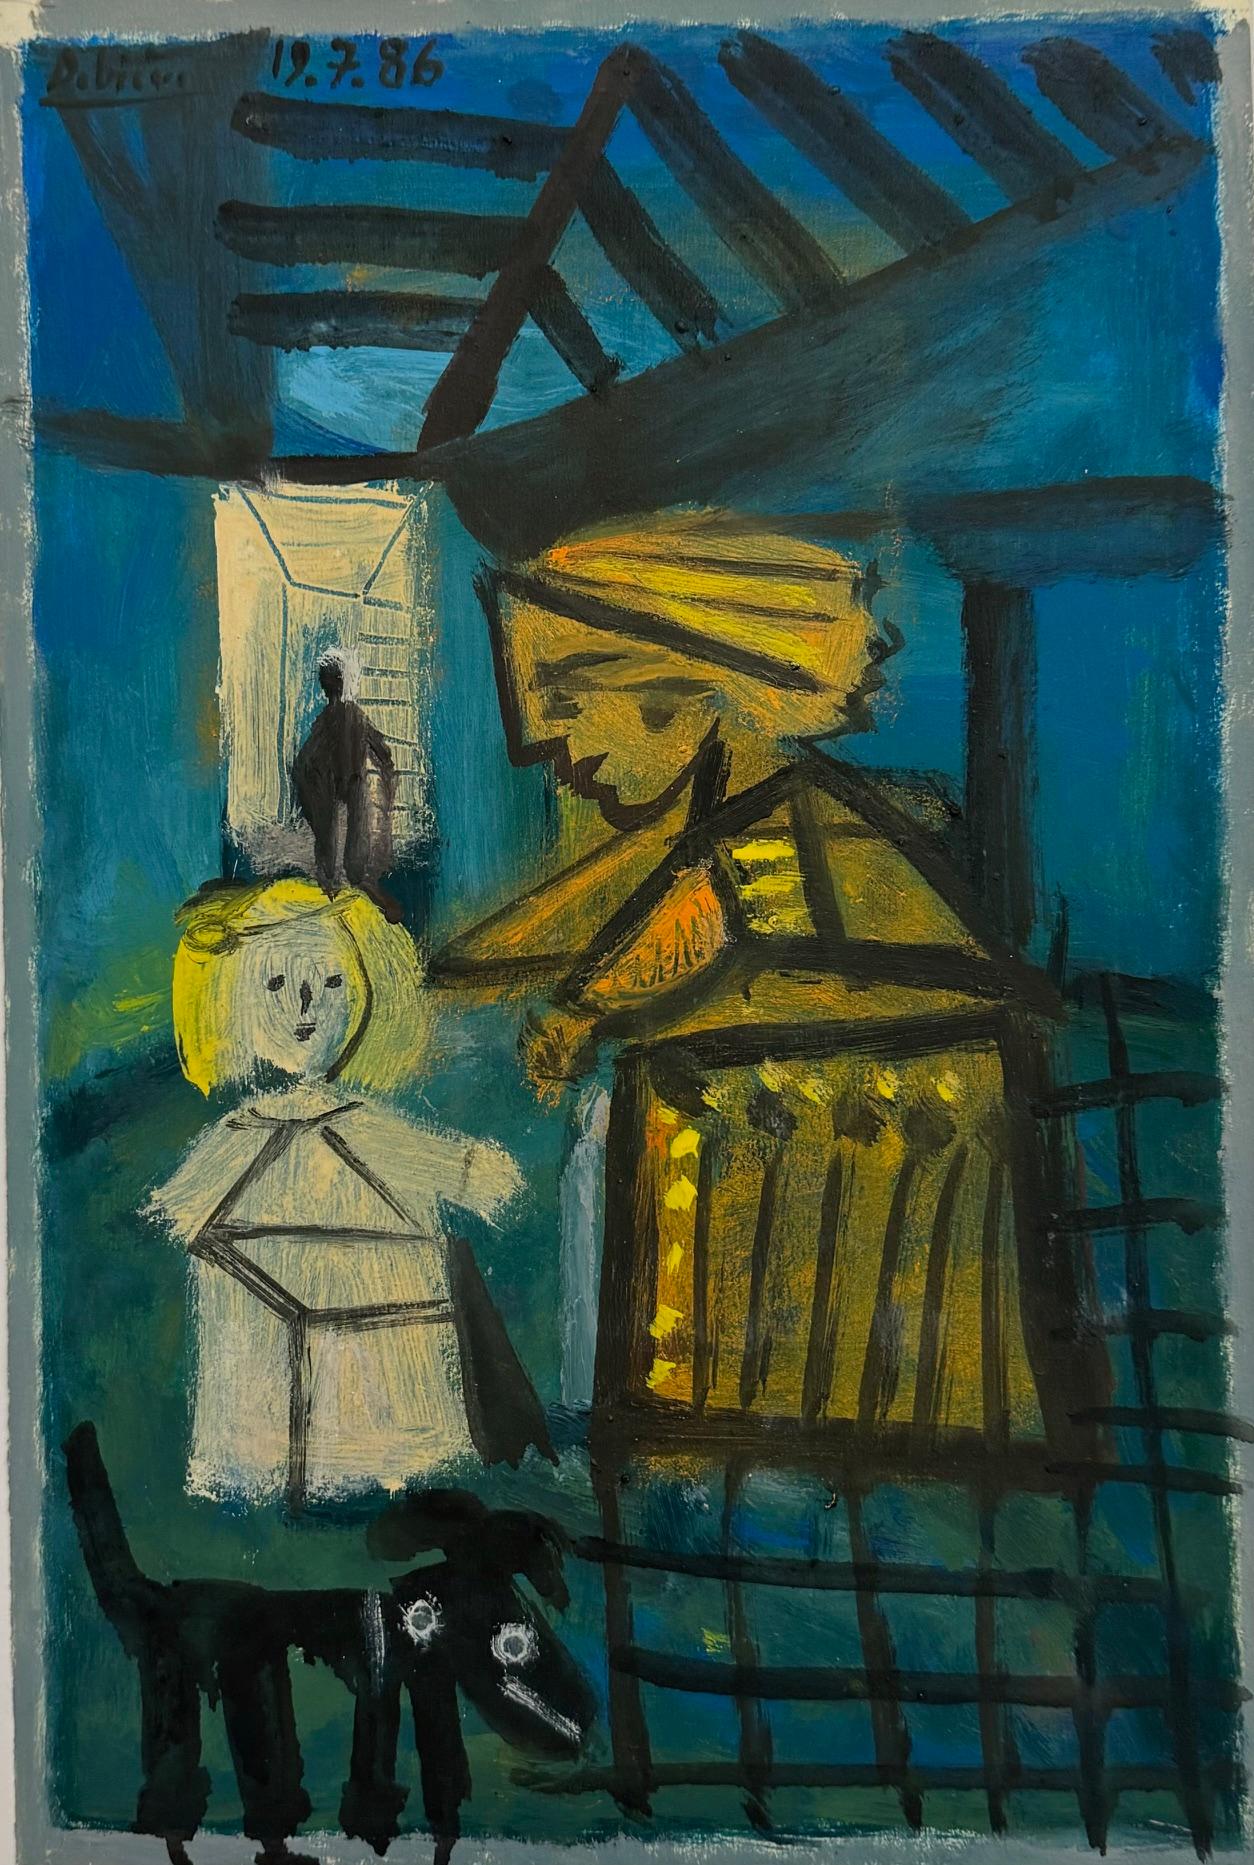 A Goodnight Hug by Raymond Debieve, French Cubist Figurative Painting on Carton